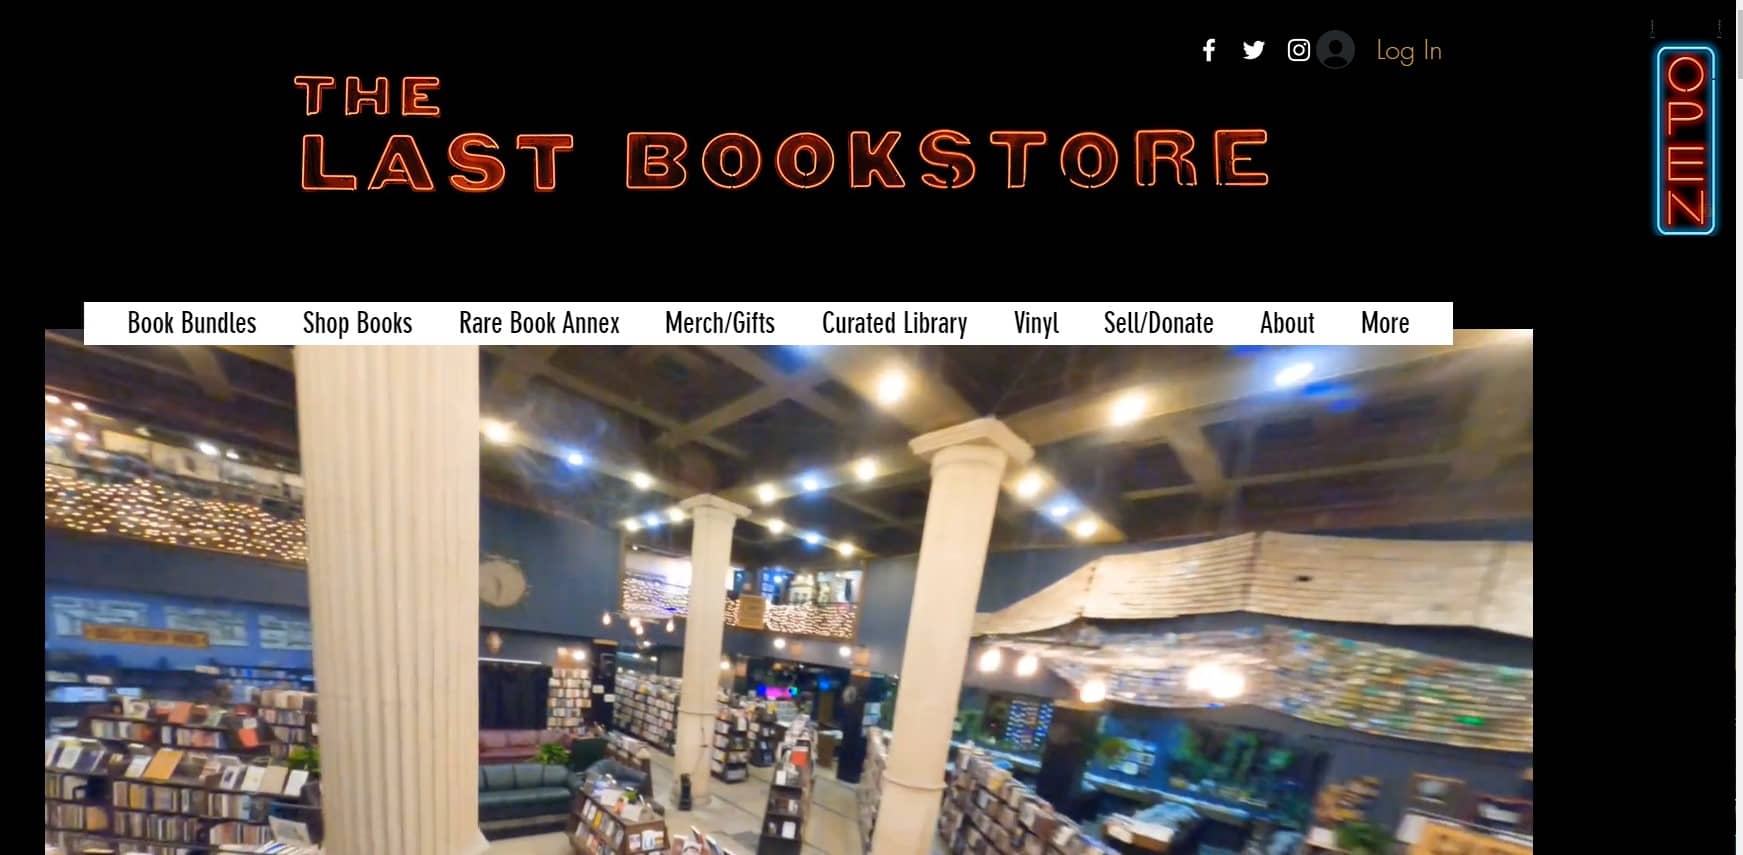 The Last Bookstore homepage